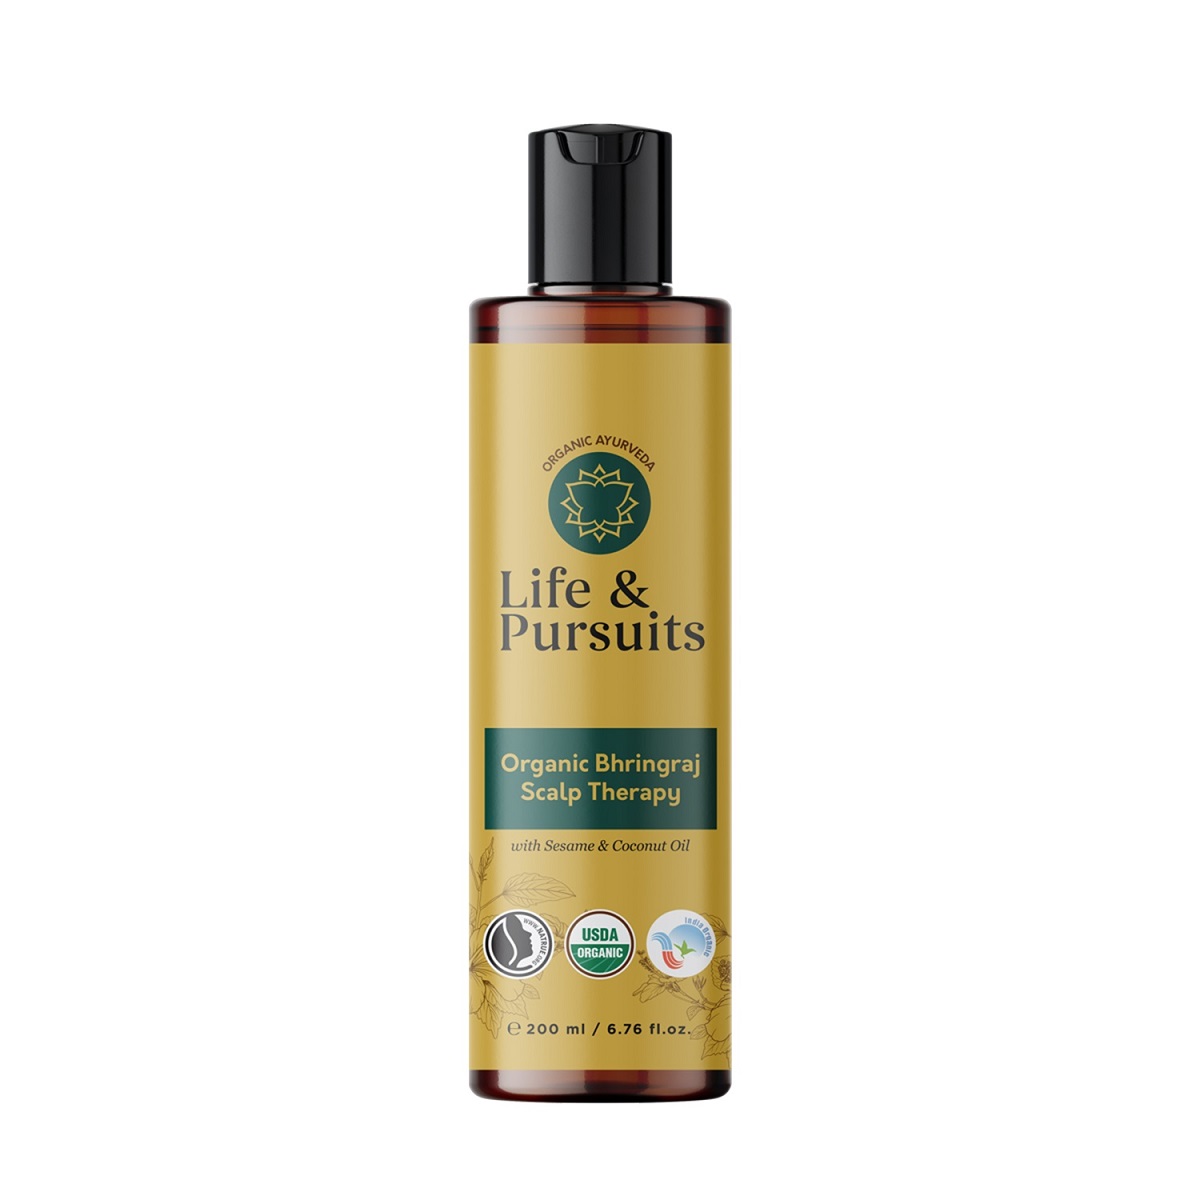 Life & Pursuits + hair oil + serum + Organic Bhringraj Scalp Therapy Hair Oil + 200 ml + buy